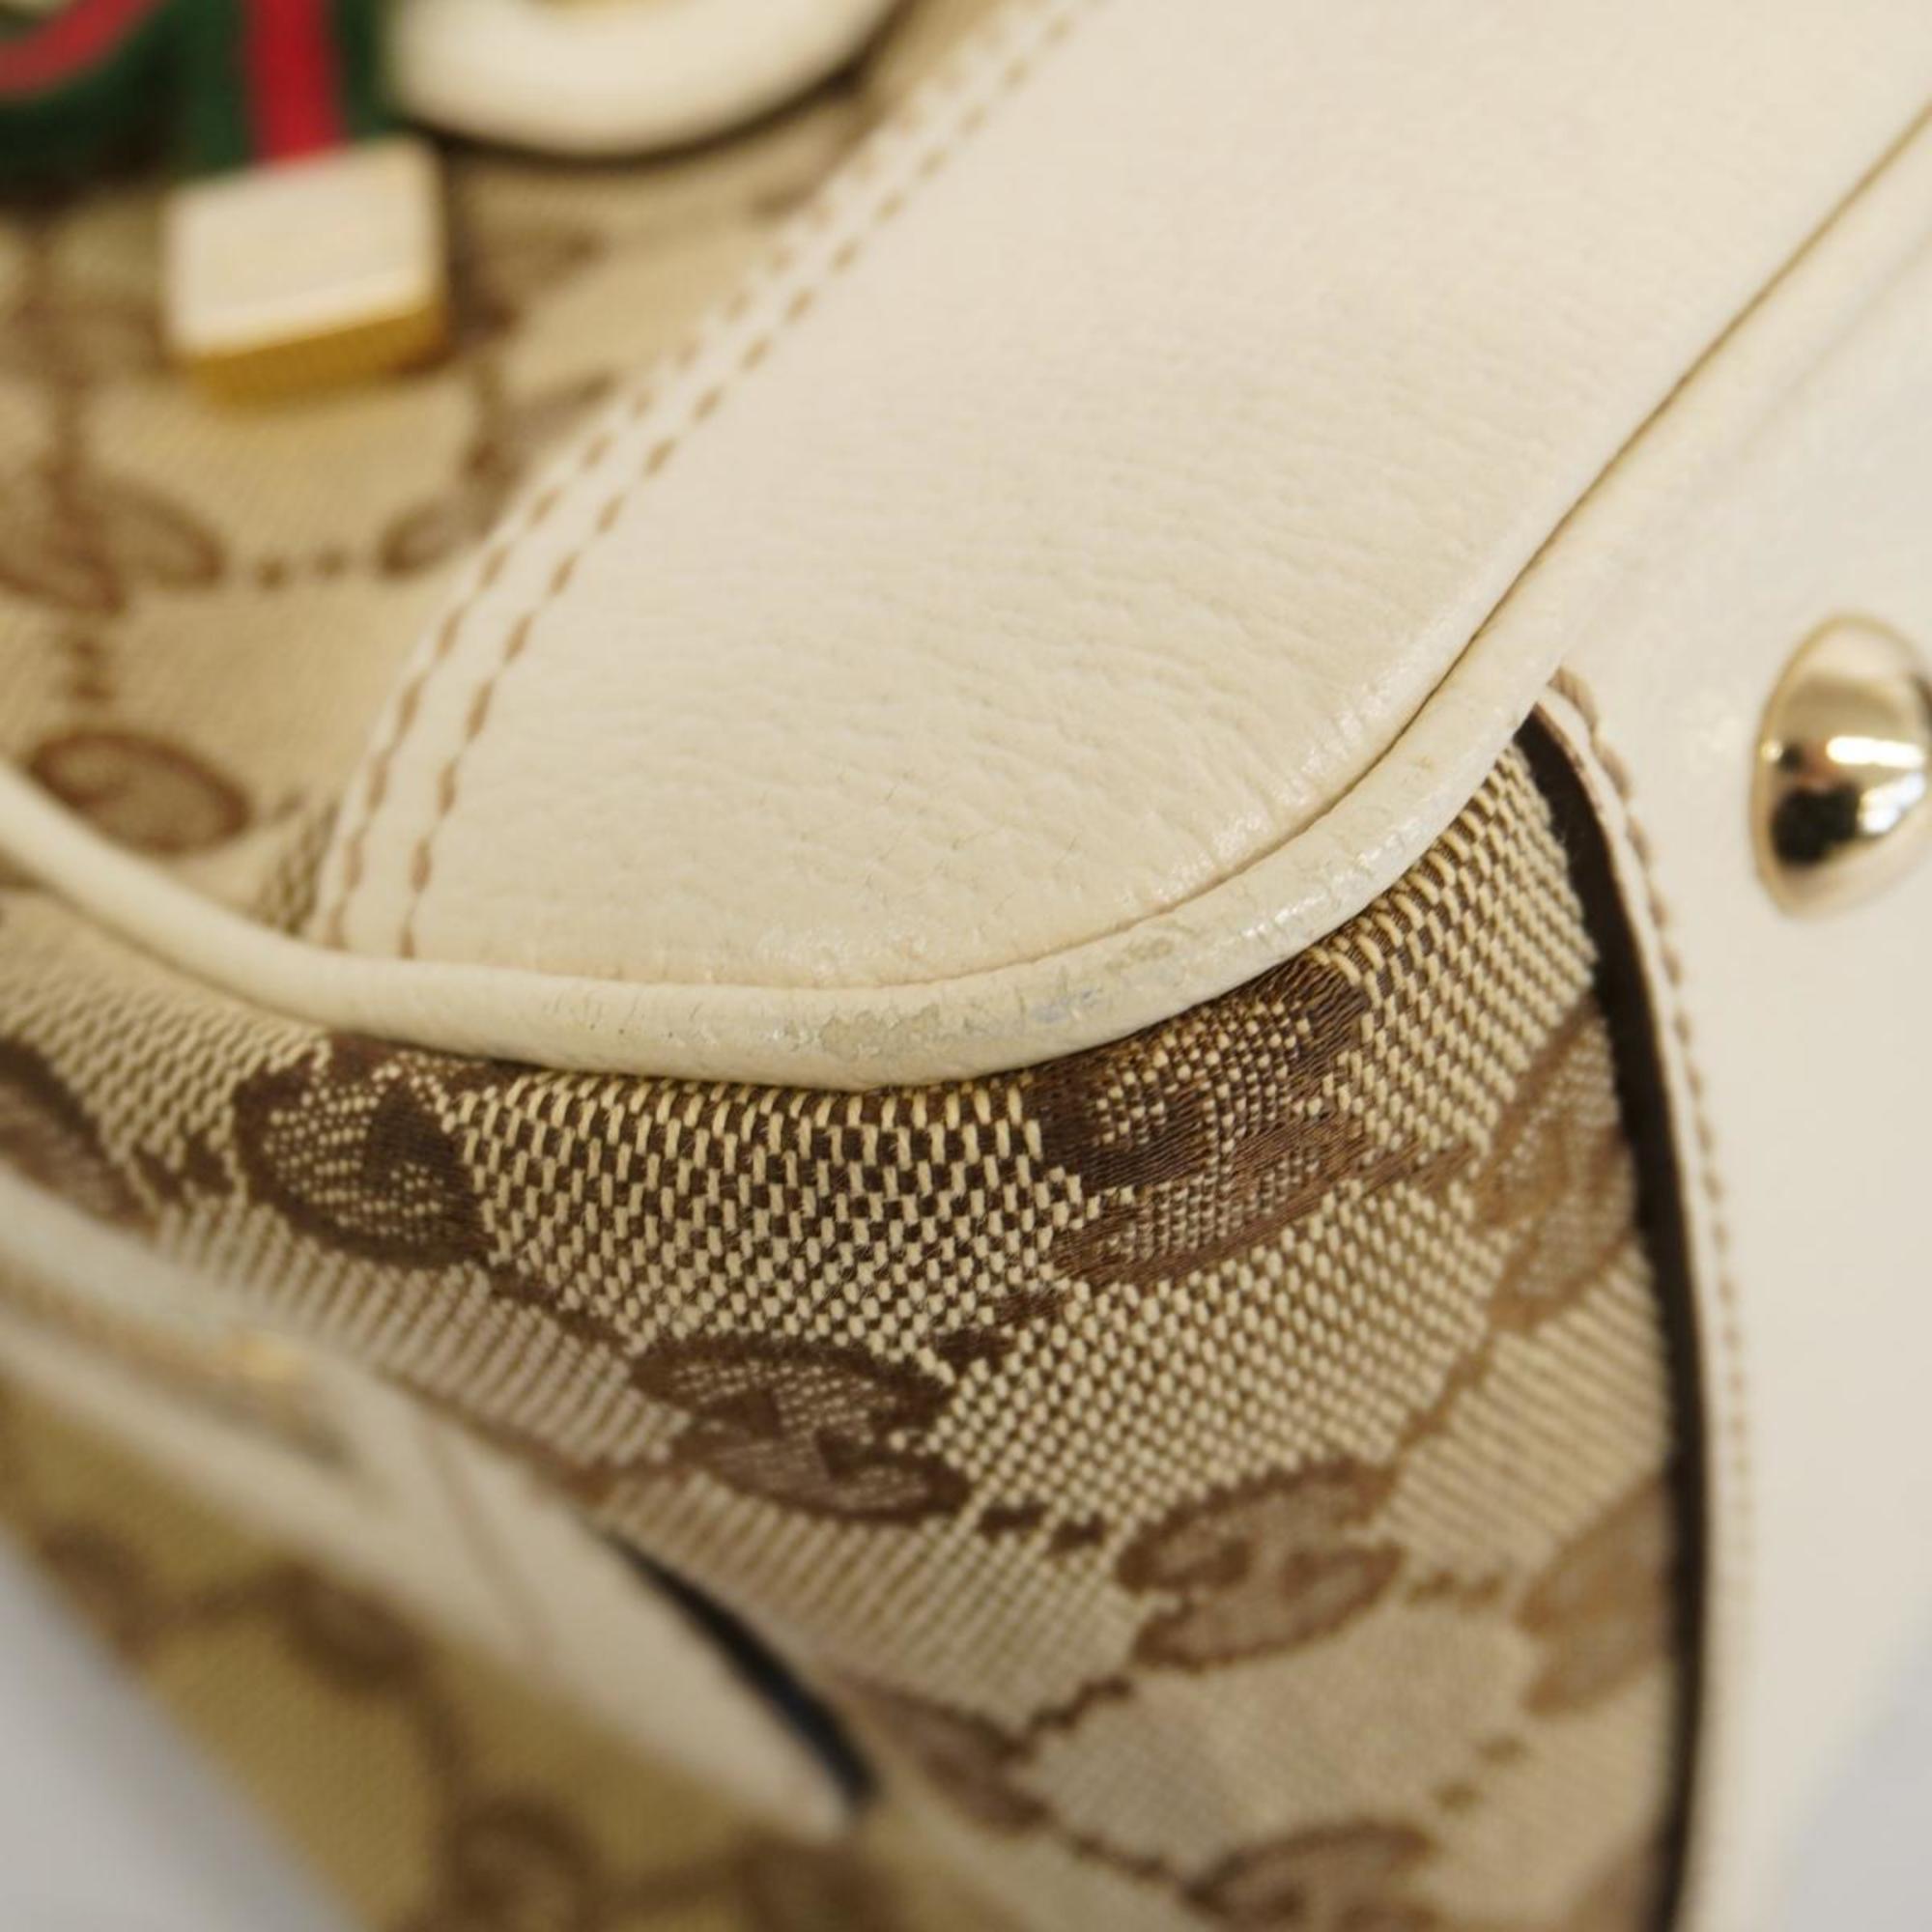 Gucci Handbag GG Canvas Sherry Line 161720 Ivory Beige Women's